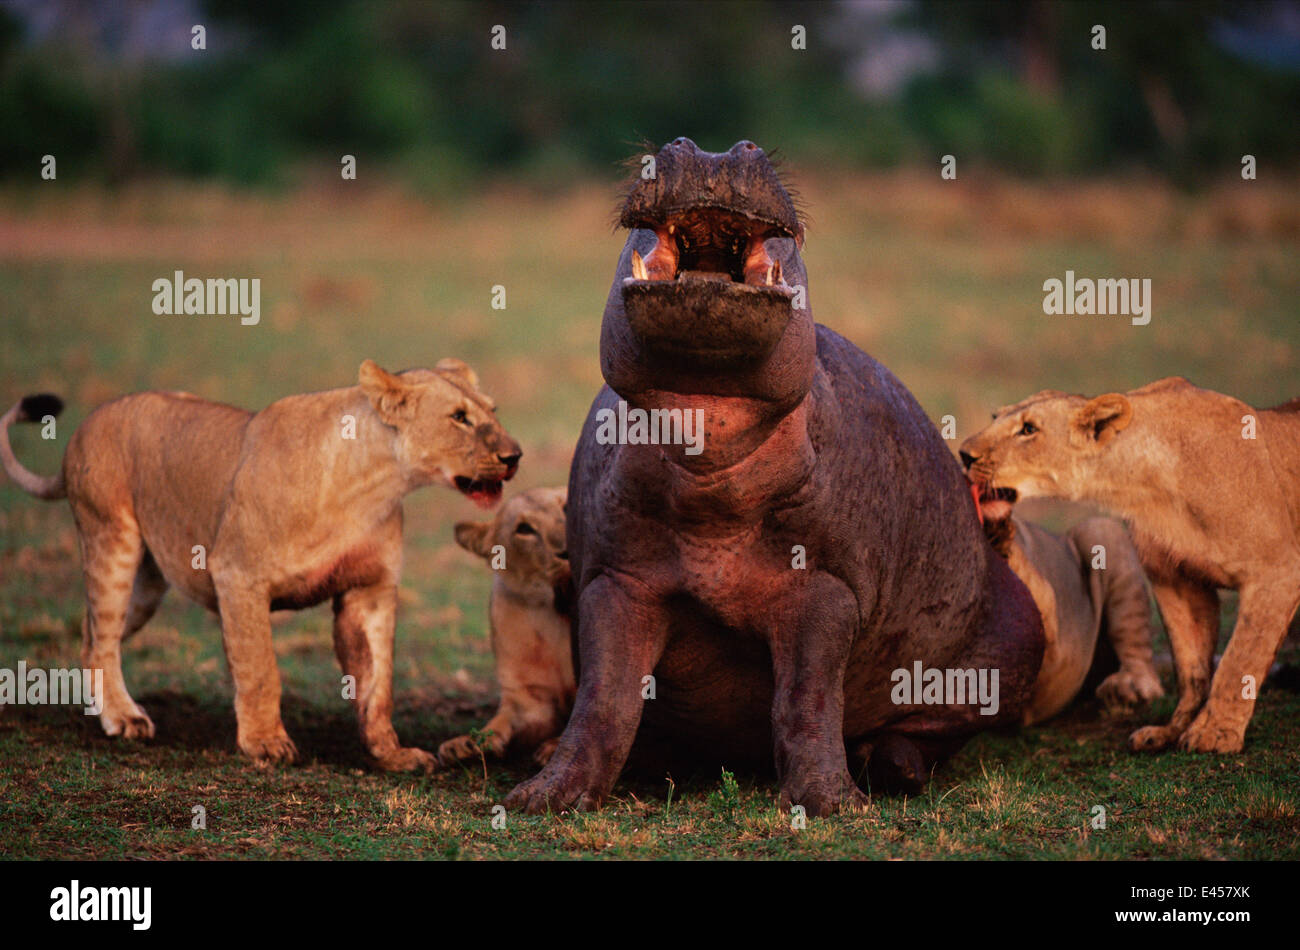 Lions attacking Hippopotamus, Masai Mara, Kenya. Ssequence 3 of 5 Stock Photo